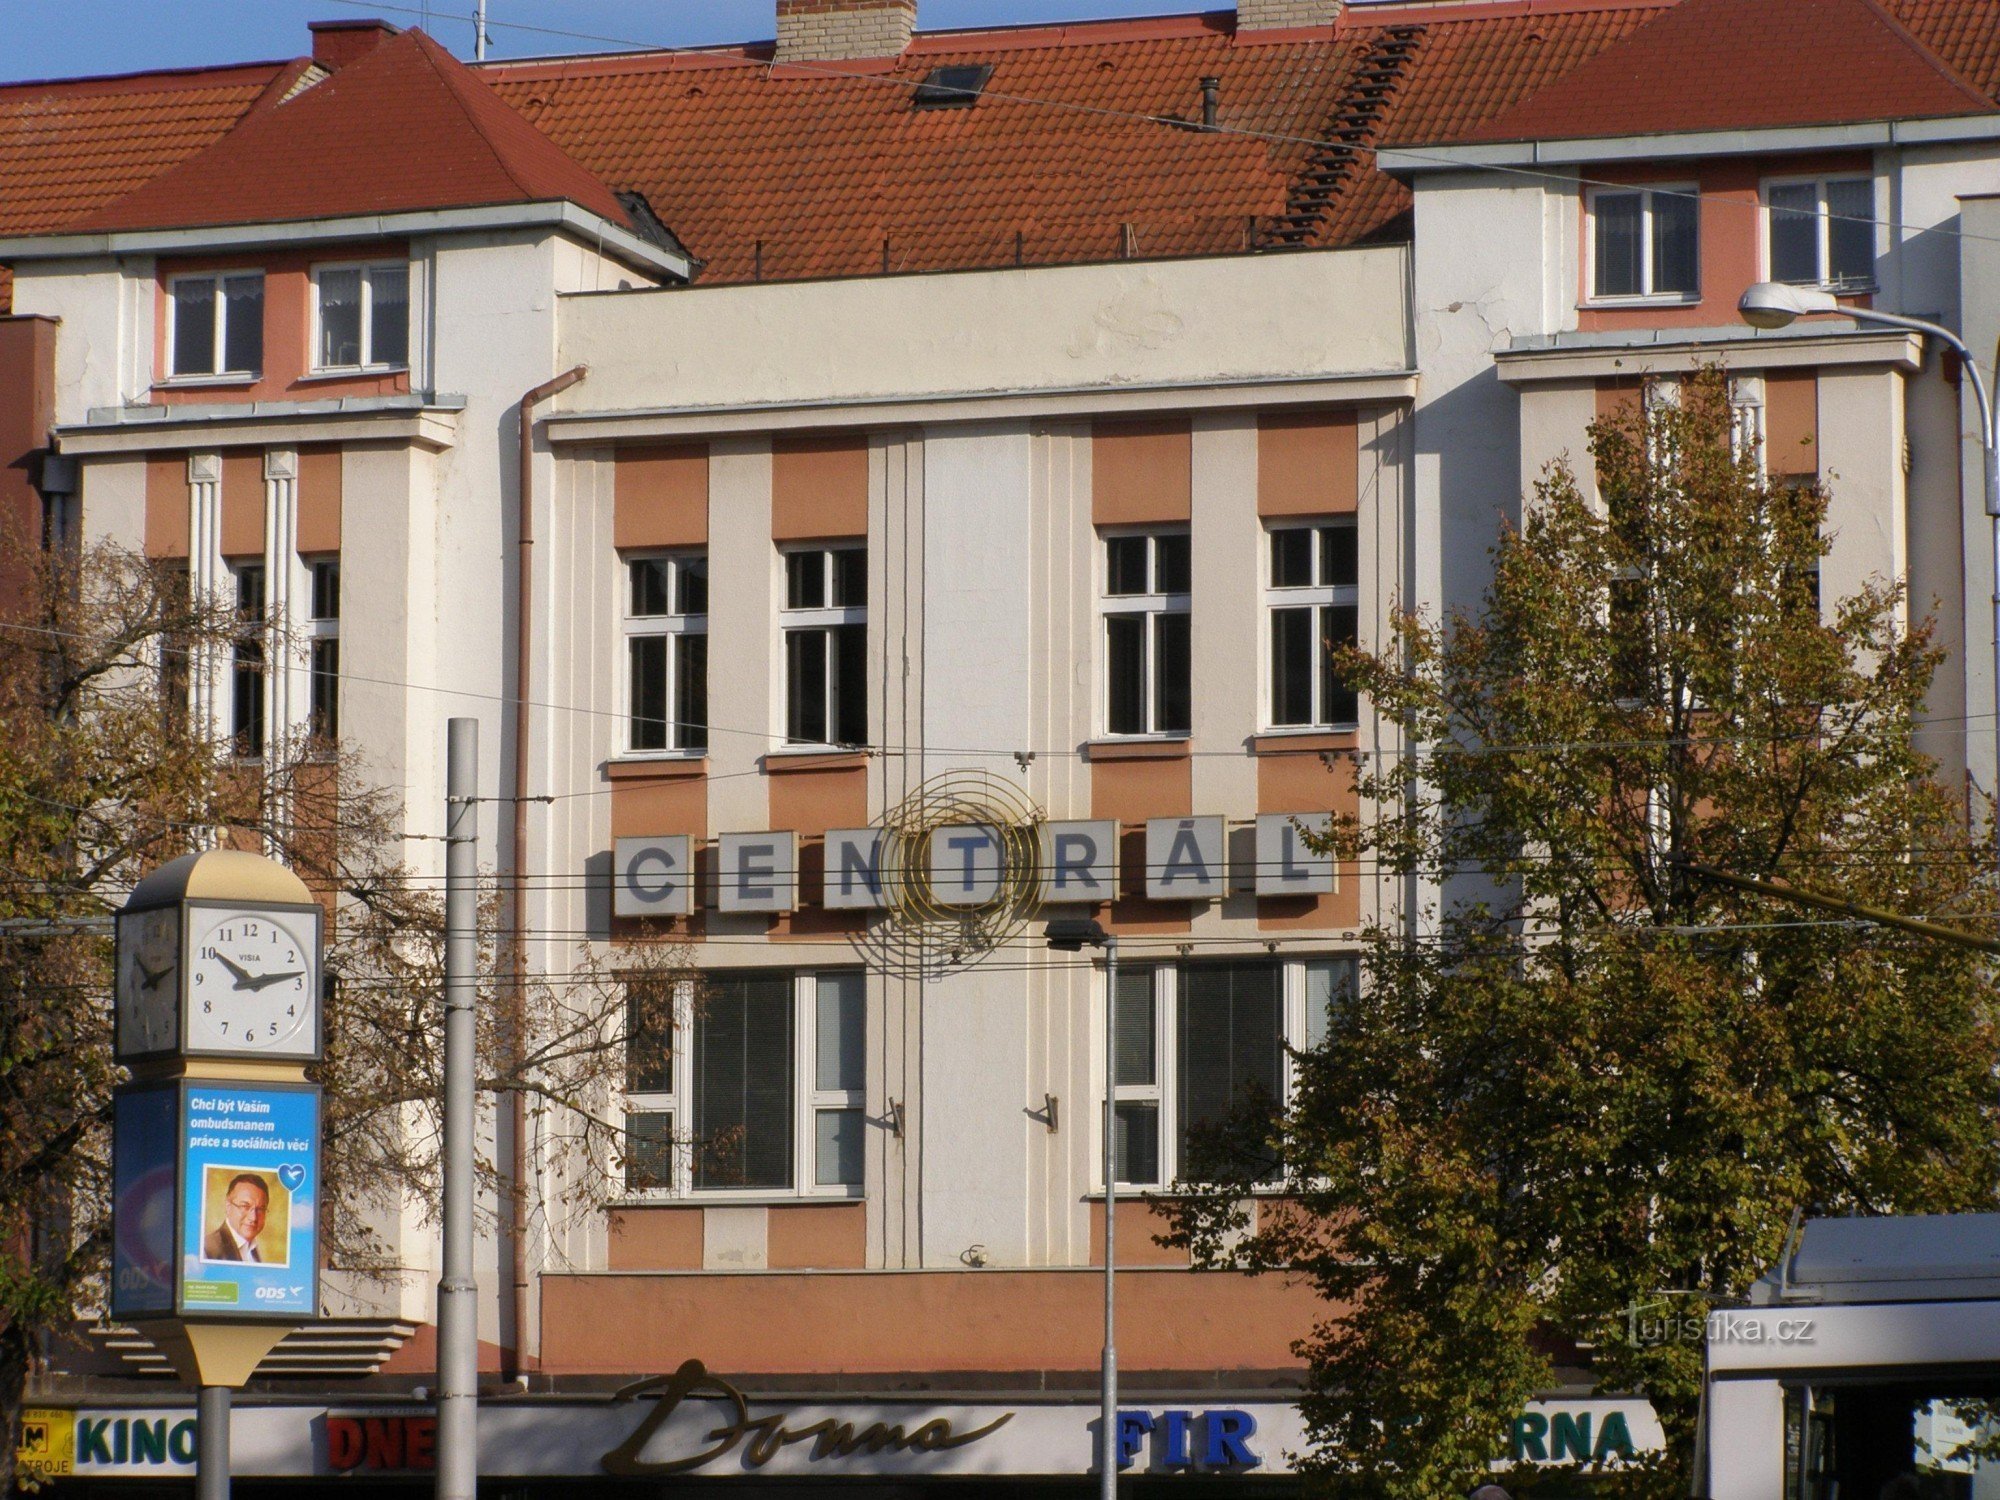 Hradec Králové - cinema Centrál